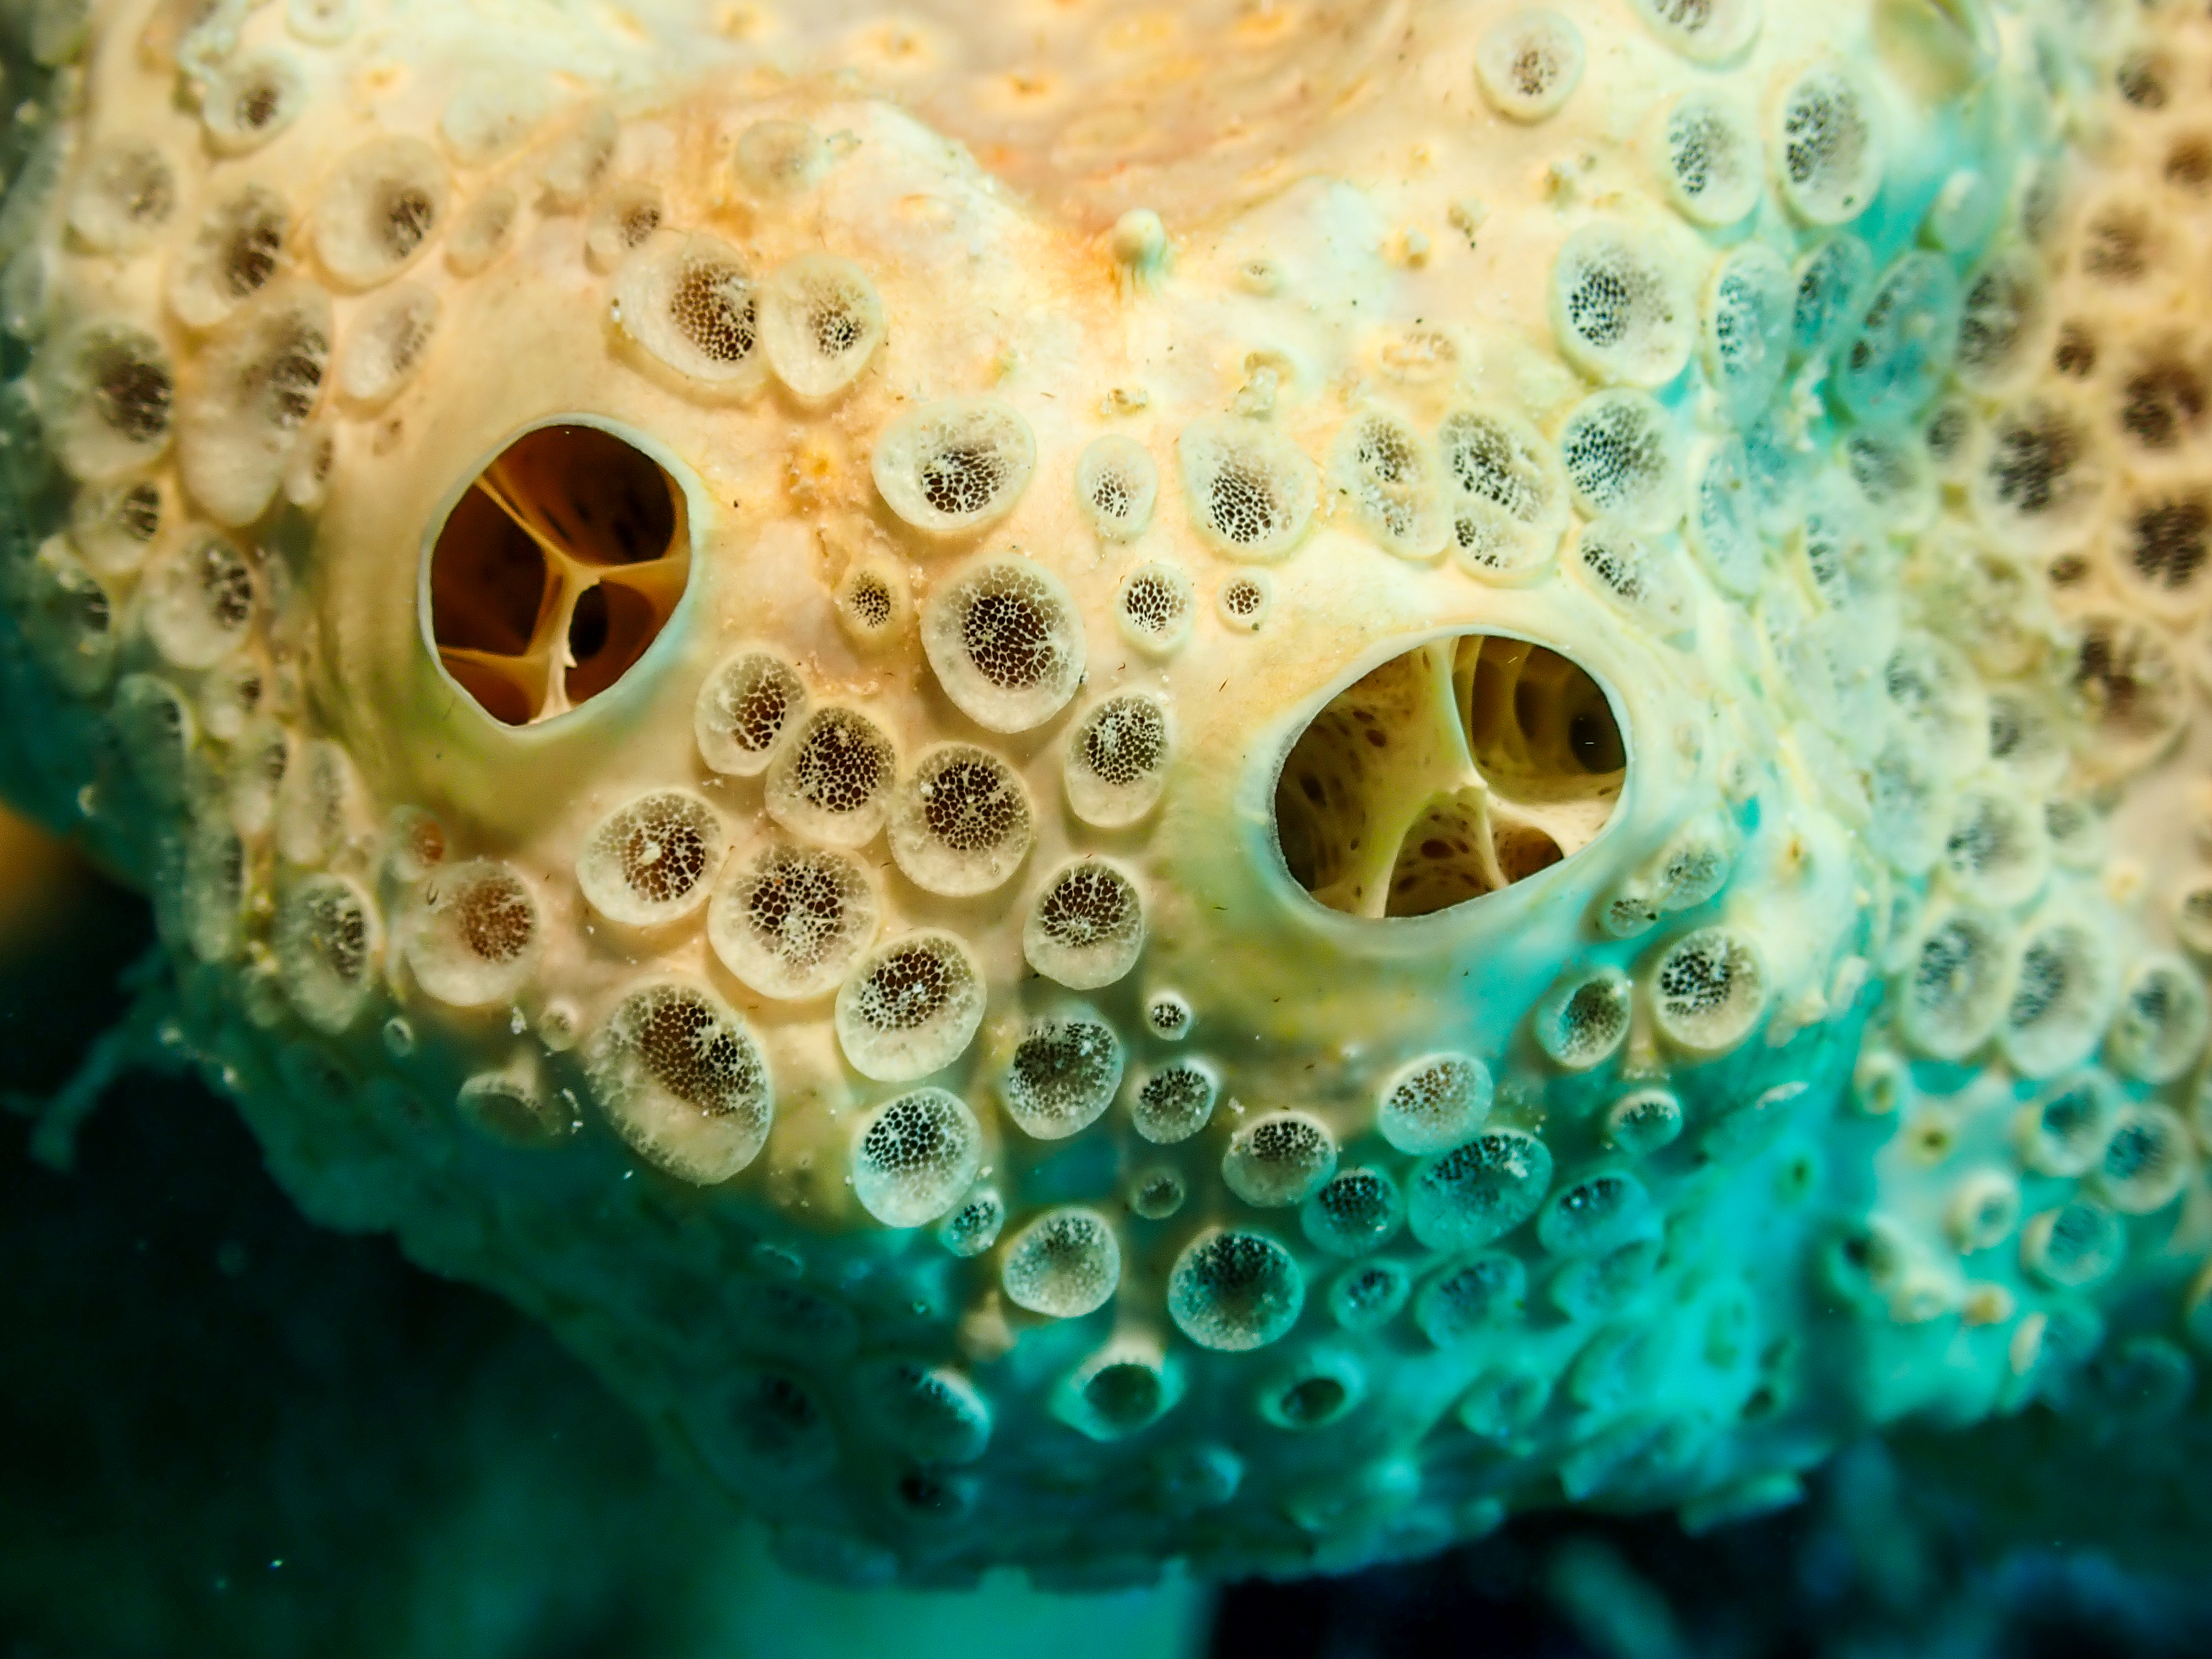 Honeycomb Sponge